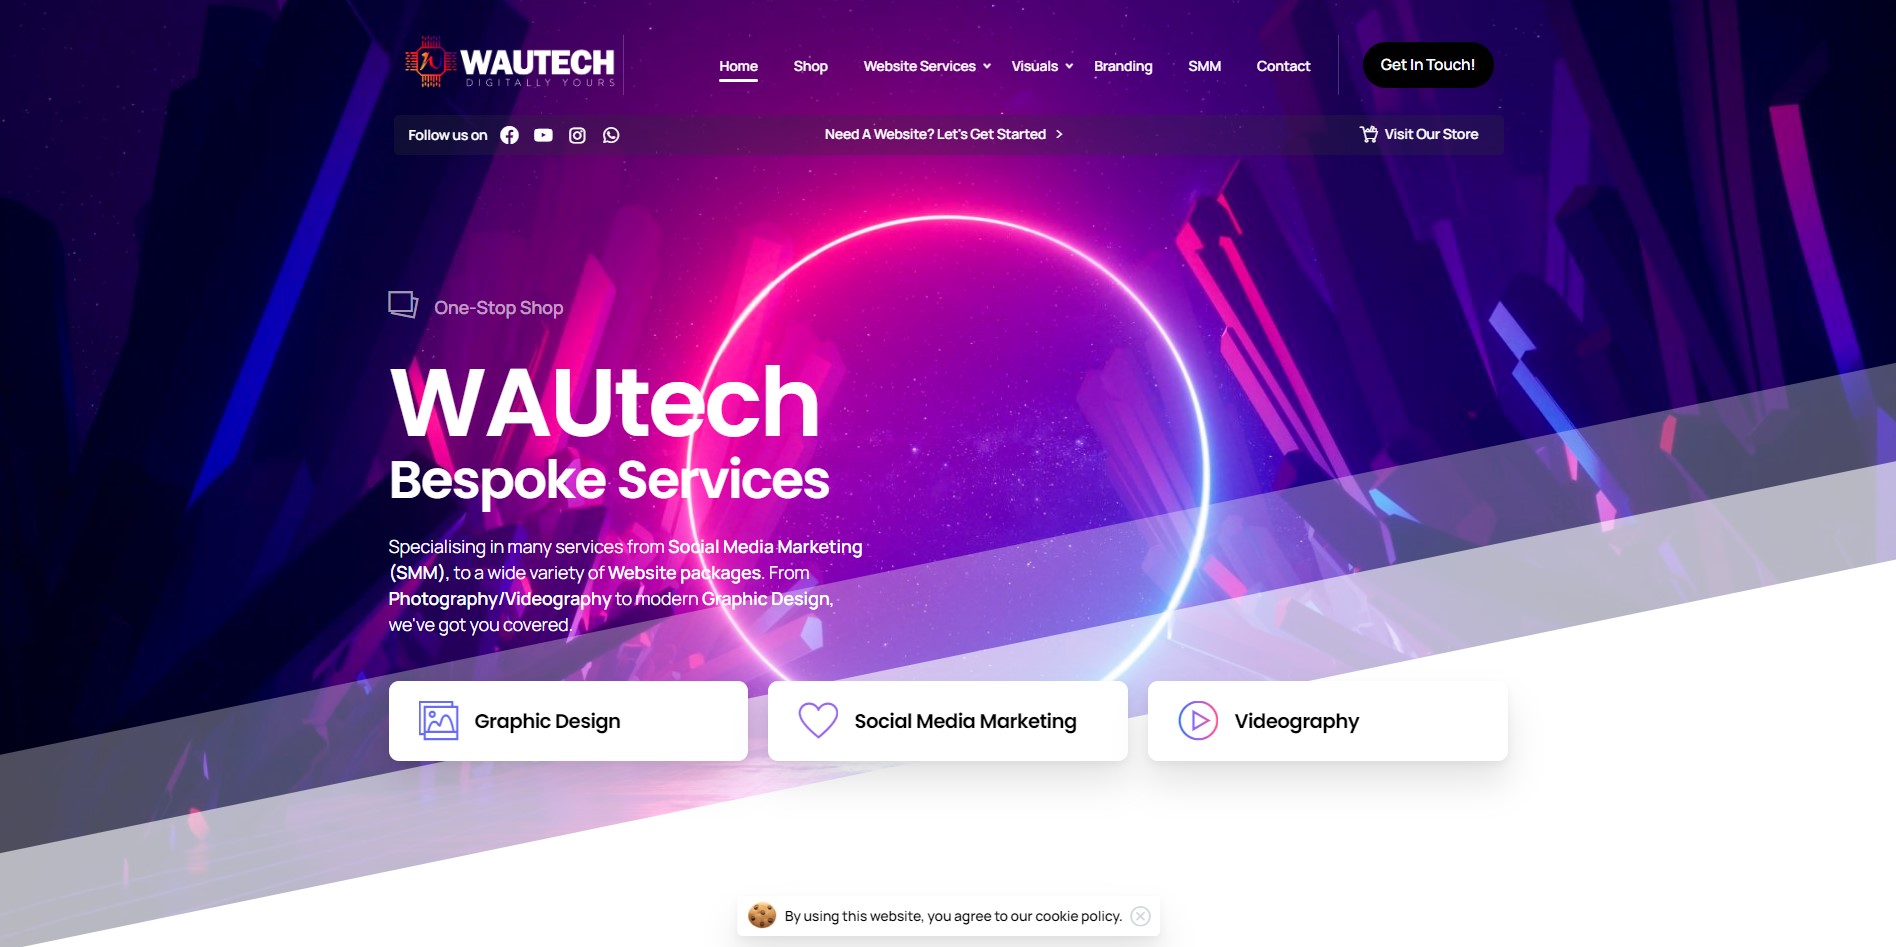 Main image for WAUtech